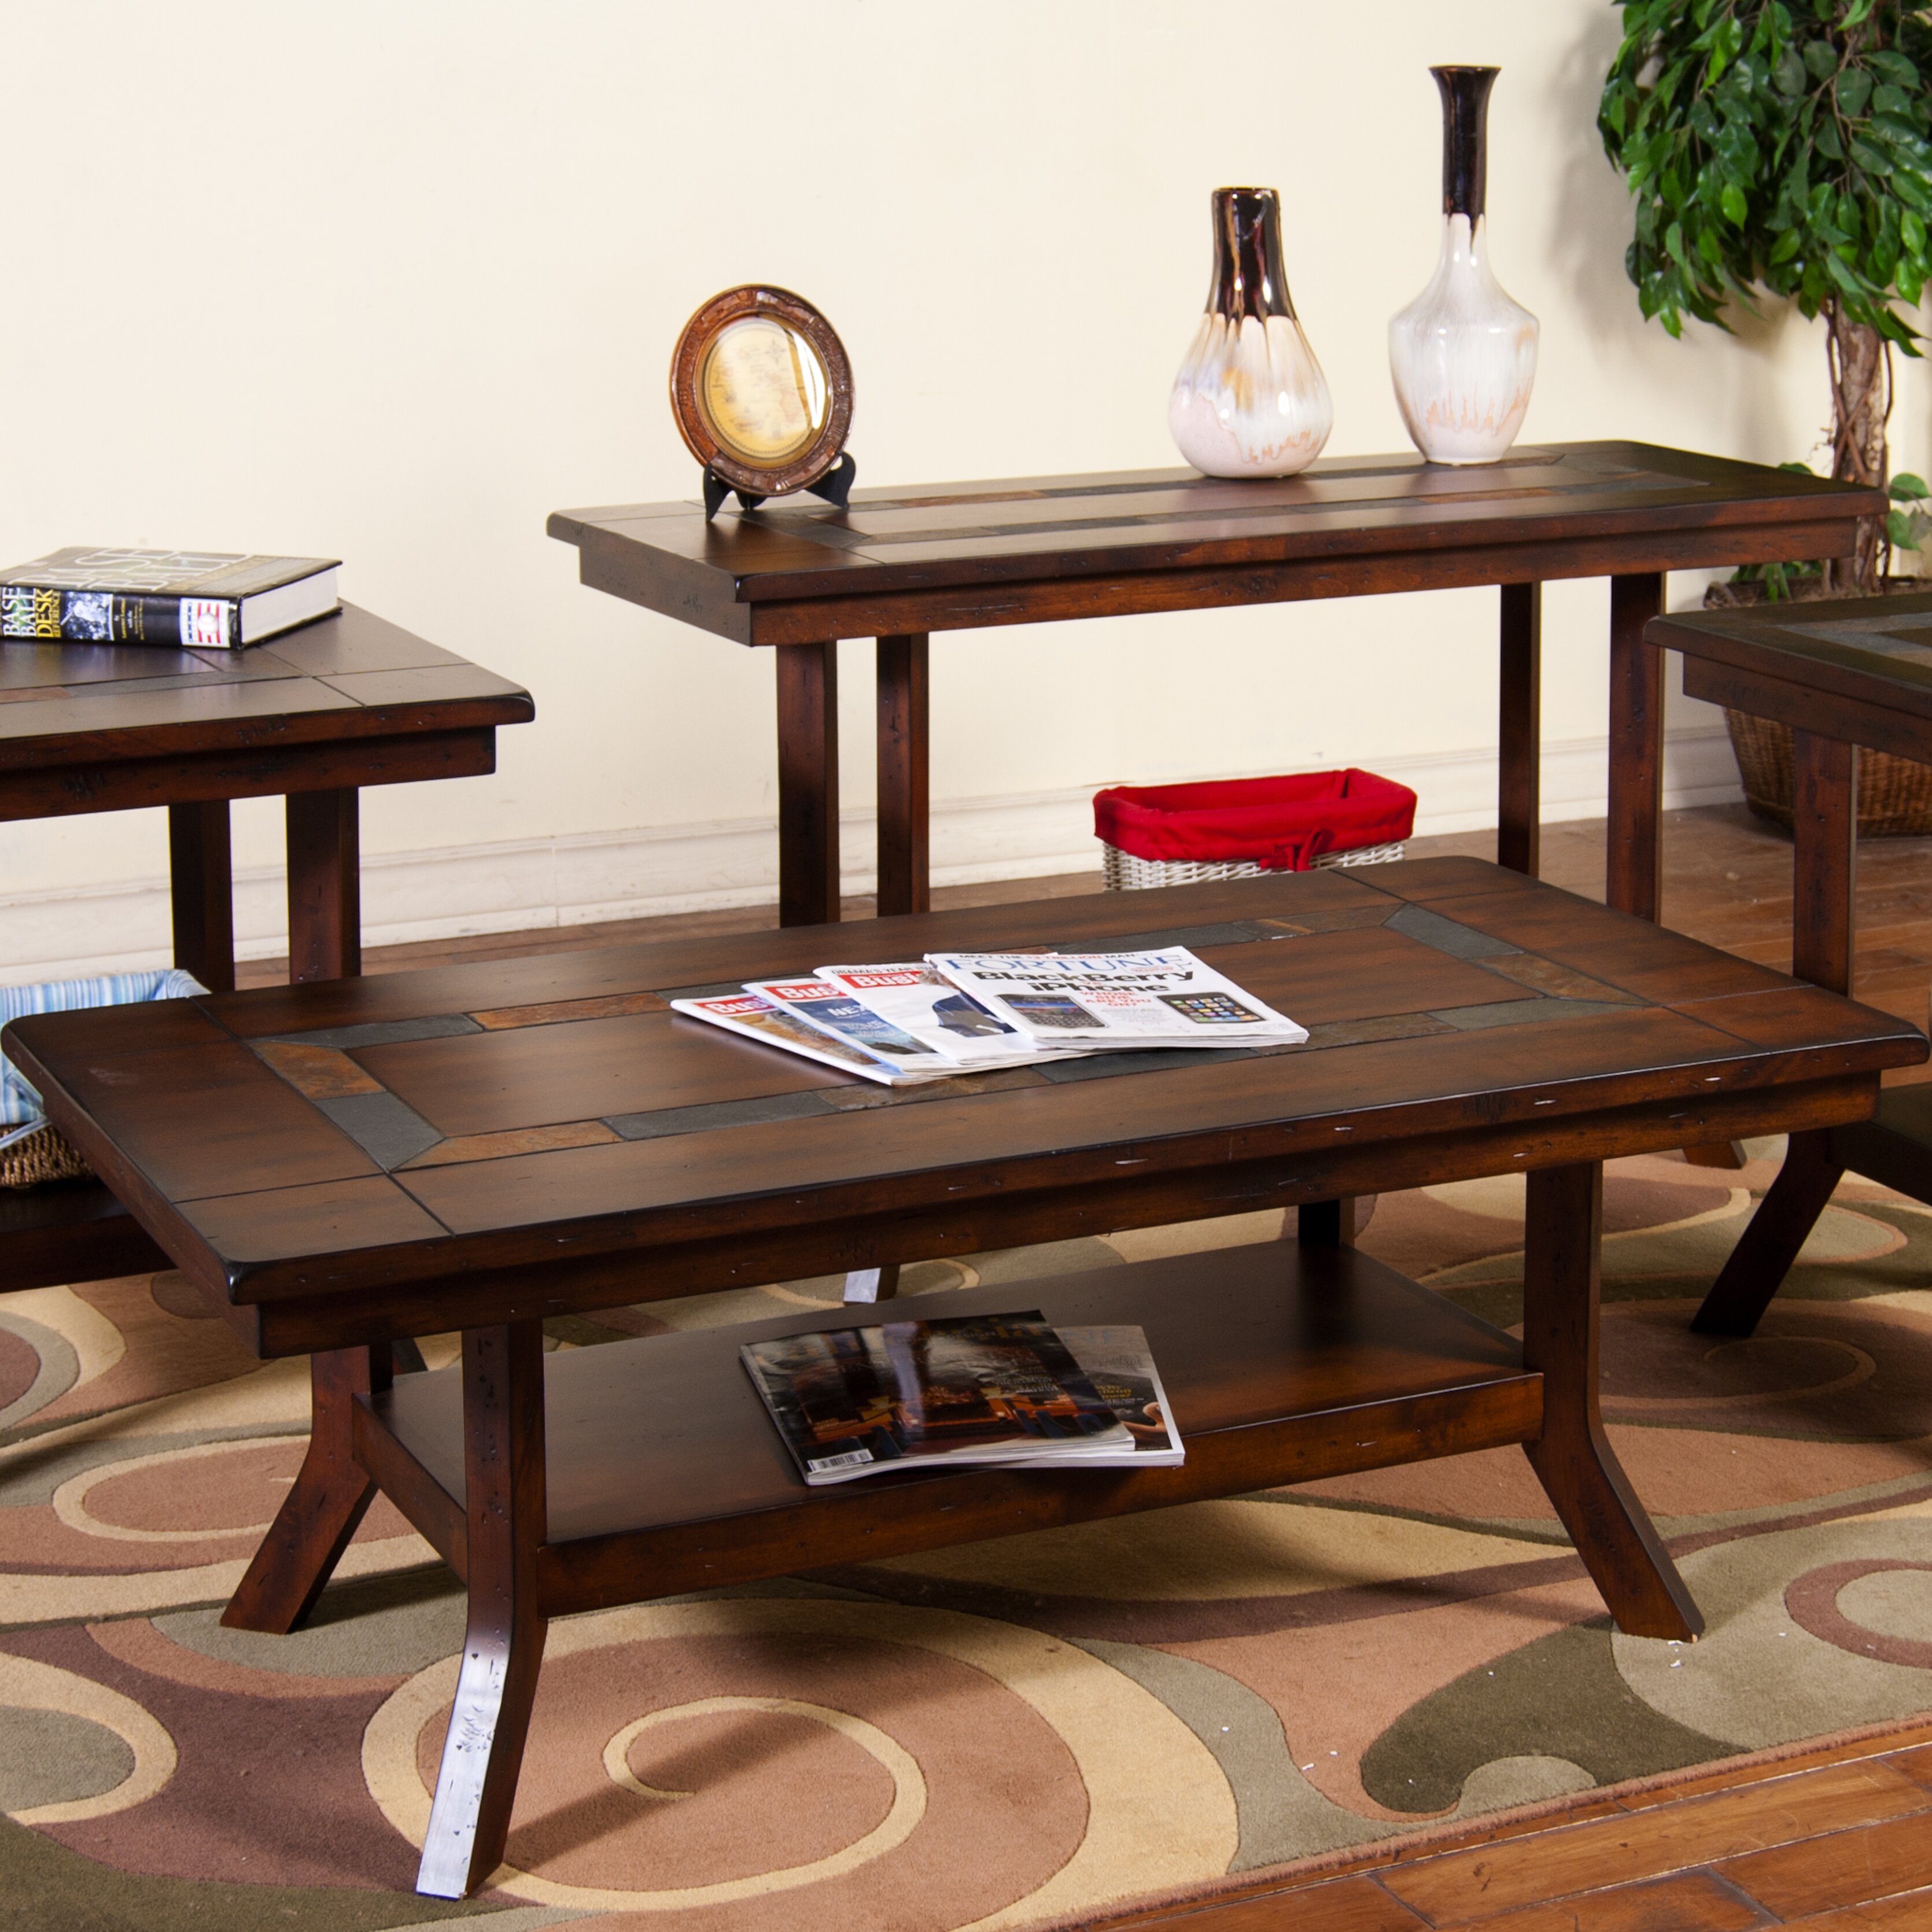 Sunny Designs Santa Fe Coffee Table Set And Reviews Wayfair